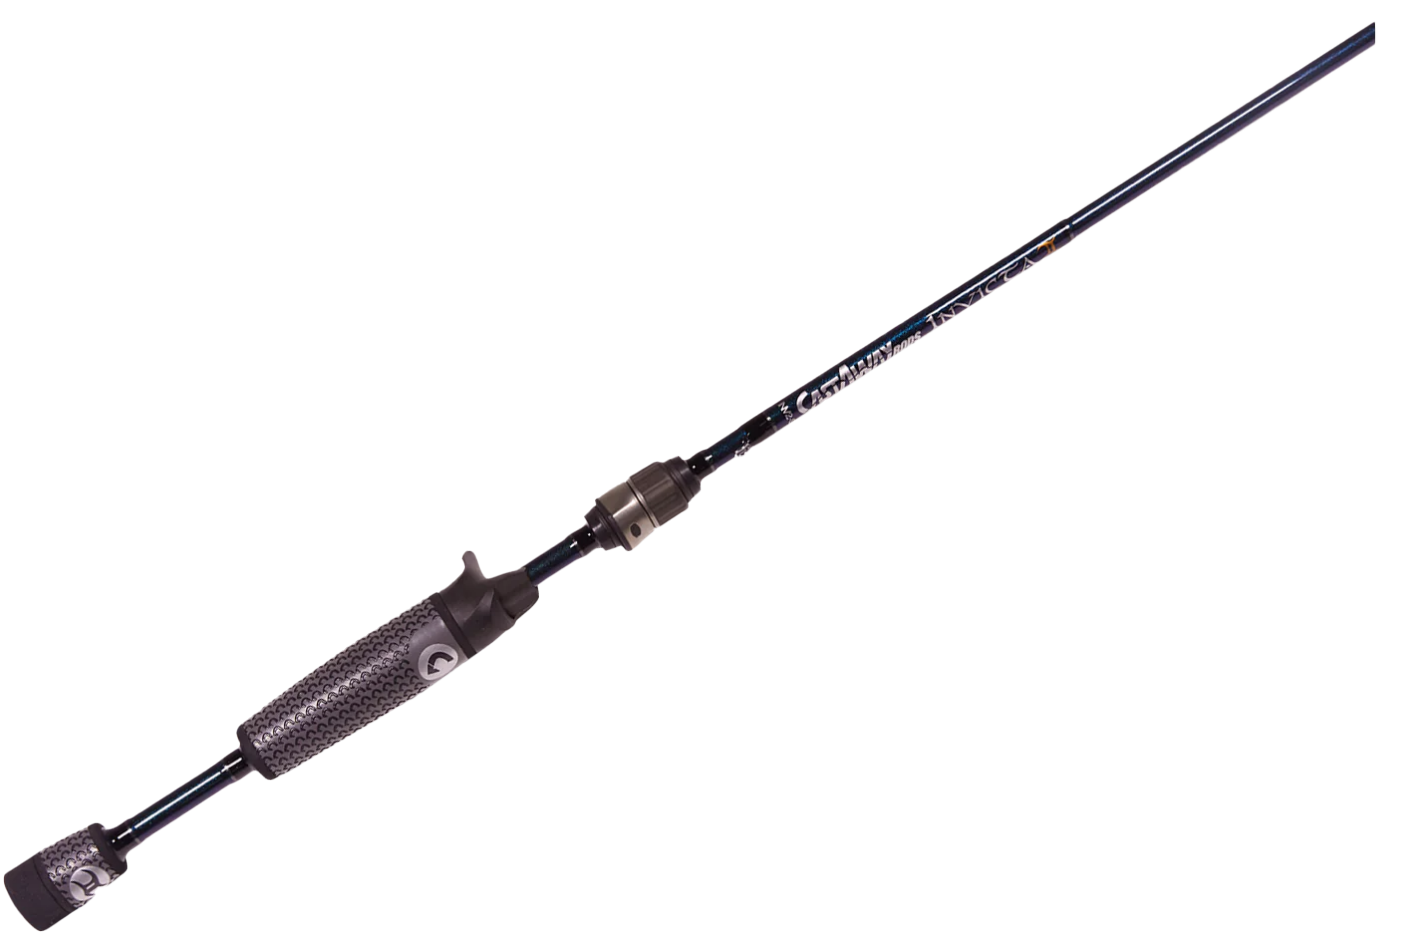 Castaway Rods Pro Sport PSW66 6'6' Medium Heavy Casting Rod